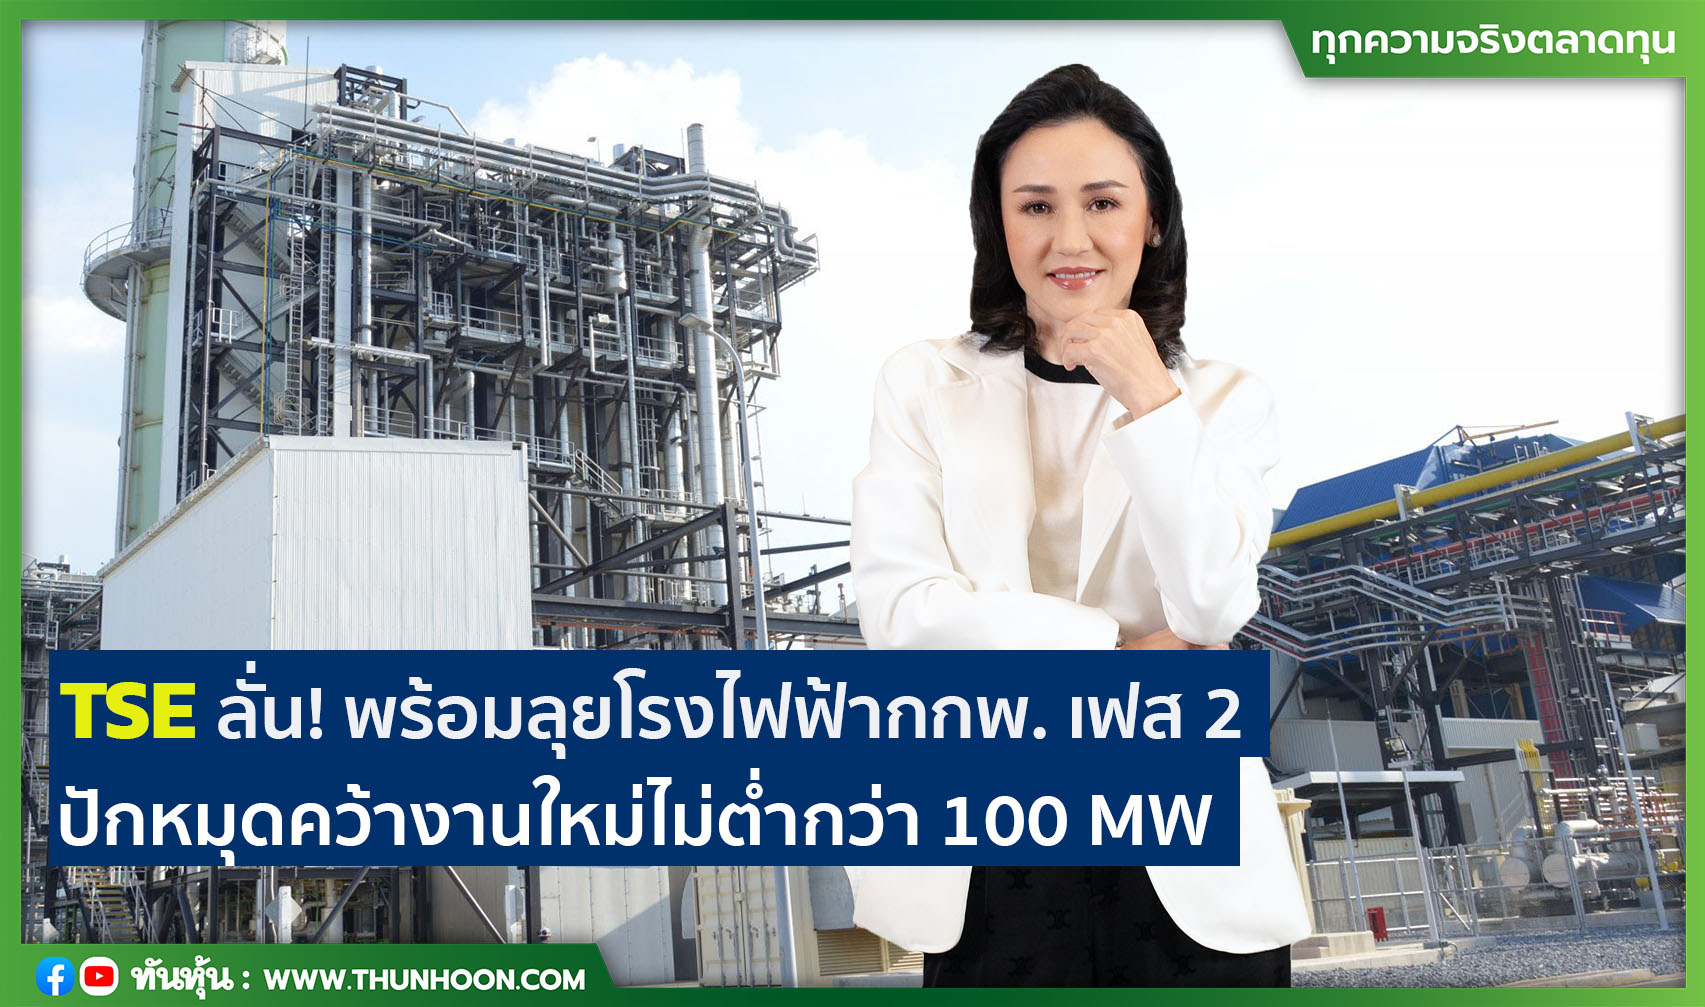 TSE ลั่น! พร้อมลุยโรงไฟฟ้ากกพ.เฟส 2  ปักหมุดคว้างานใหม่ไม่ต่ำกว่า 100 MW 